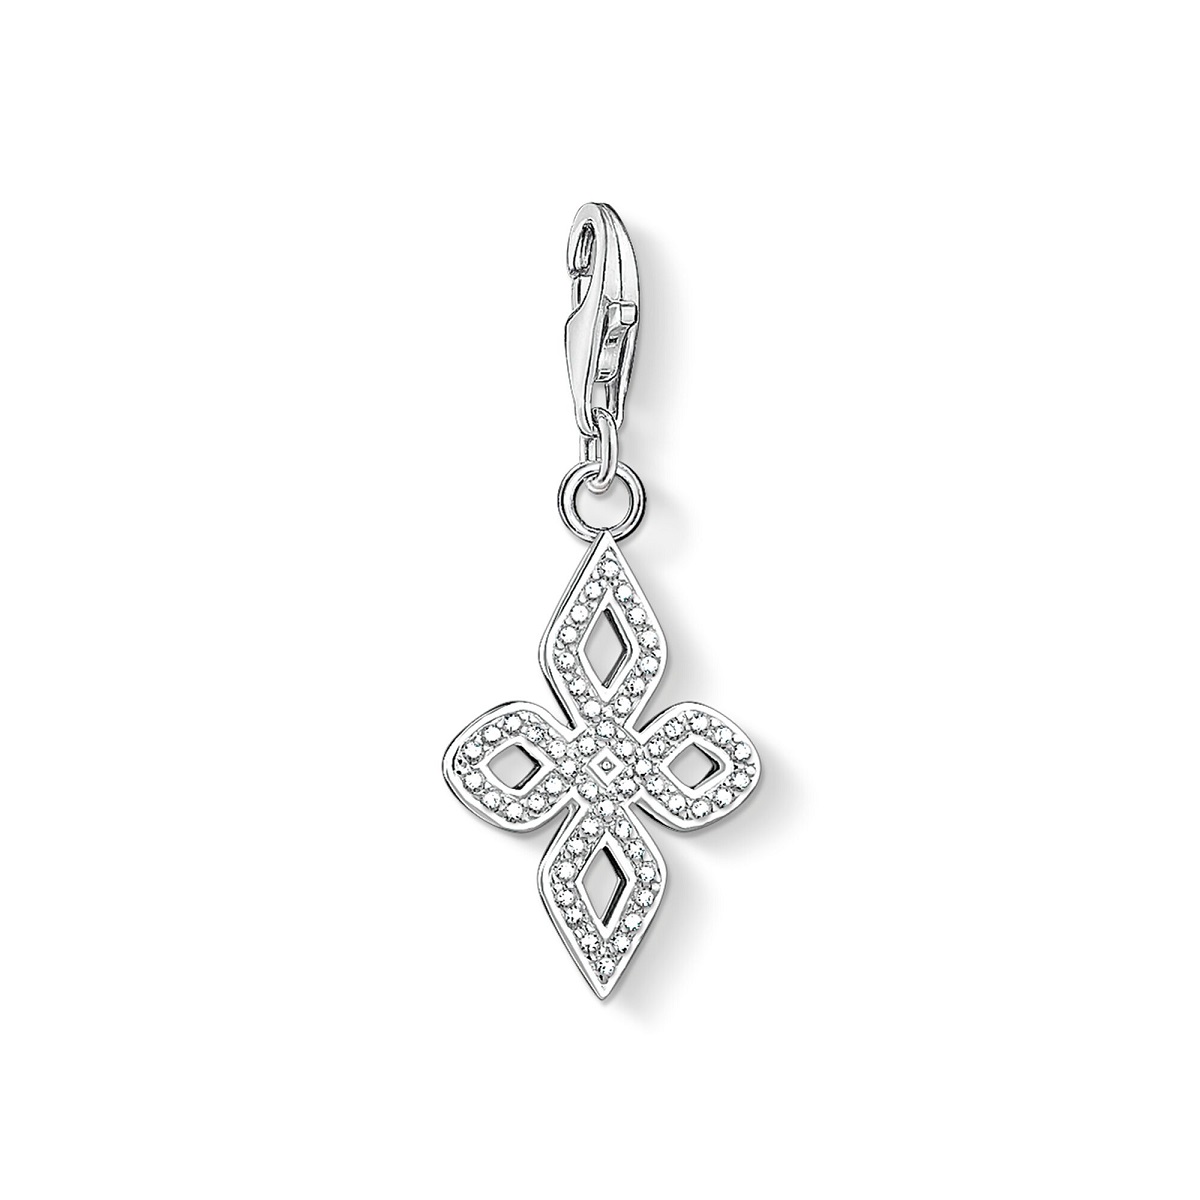 Thomas Sabo Charm Pendant - Silver and Zirconia Small Love Knot 1563-051-14